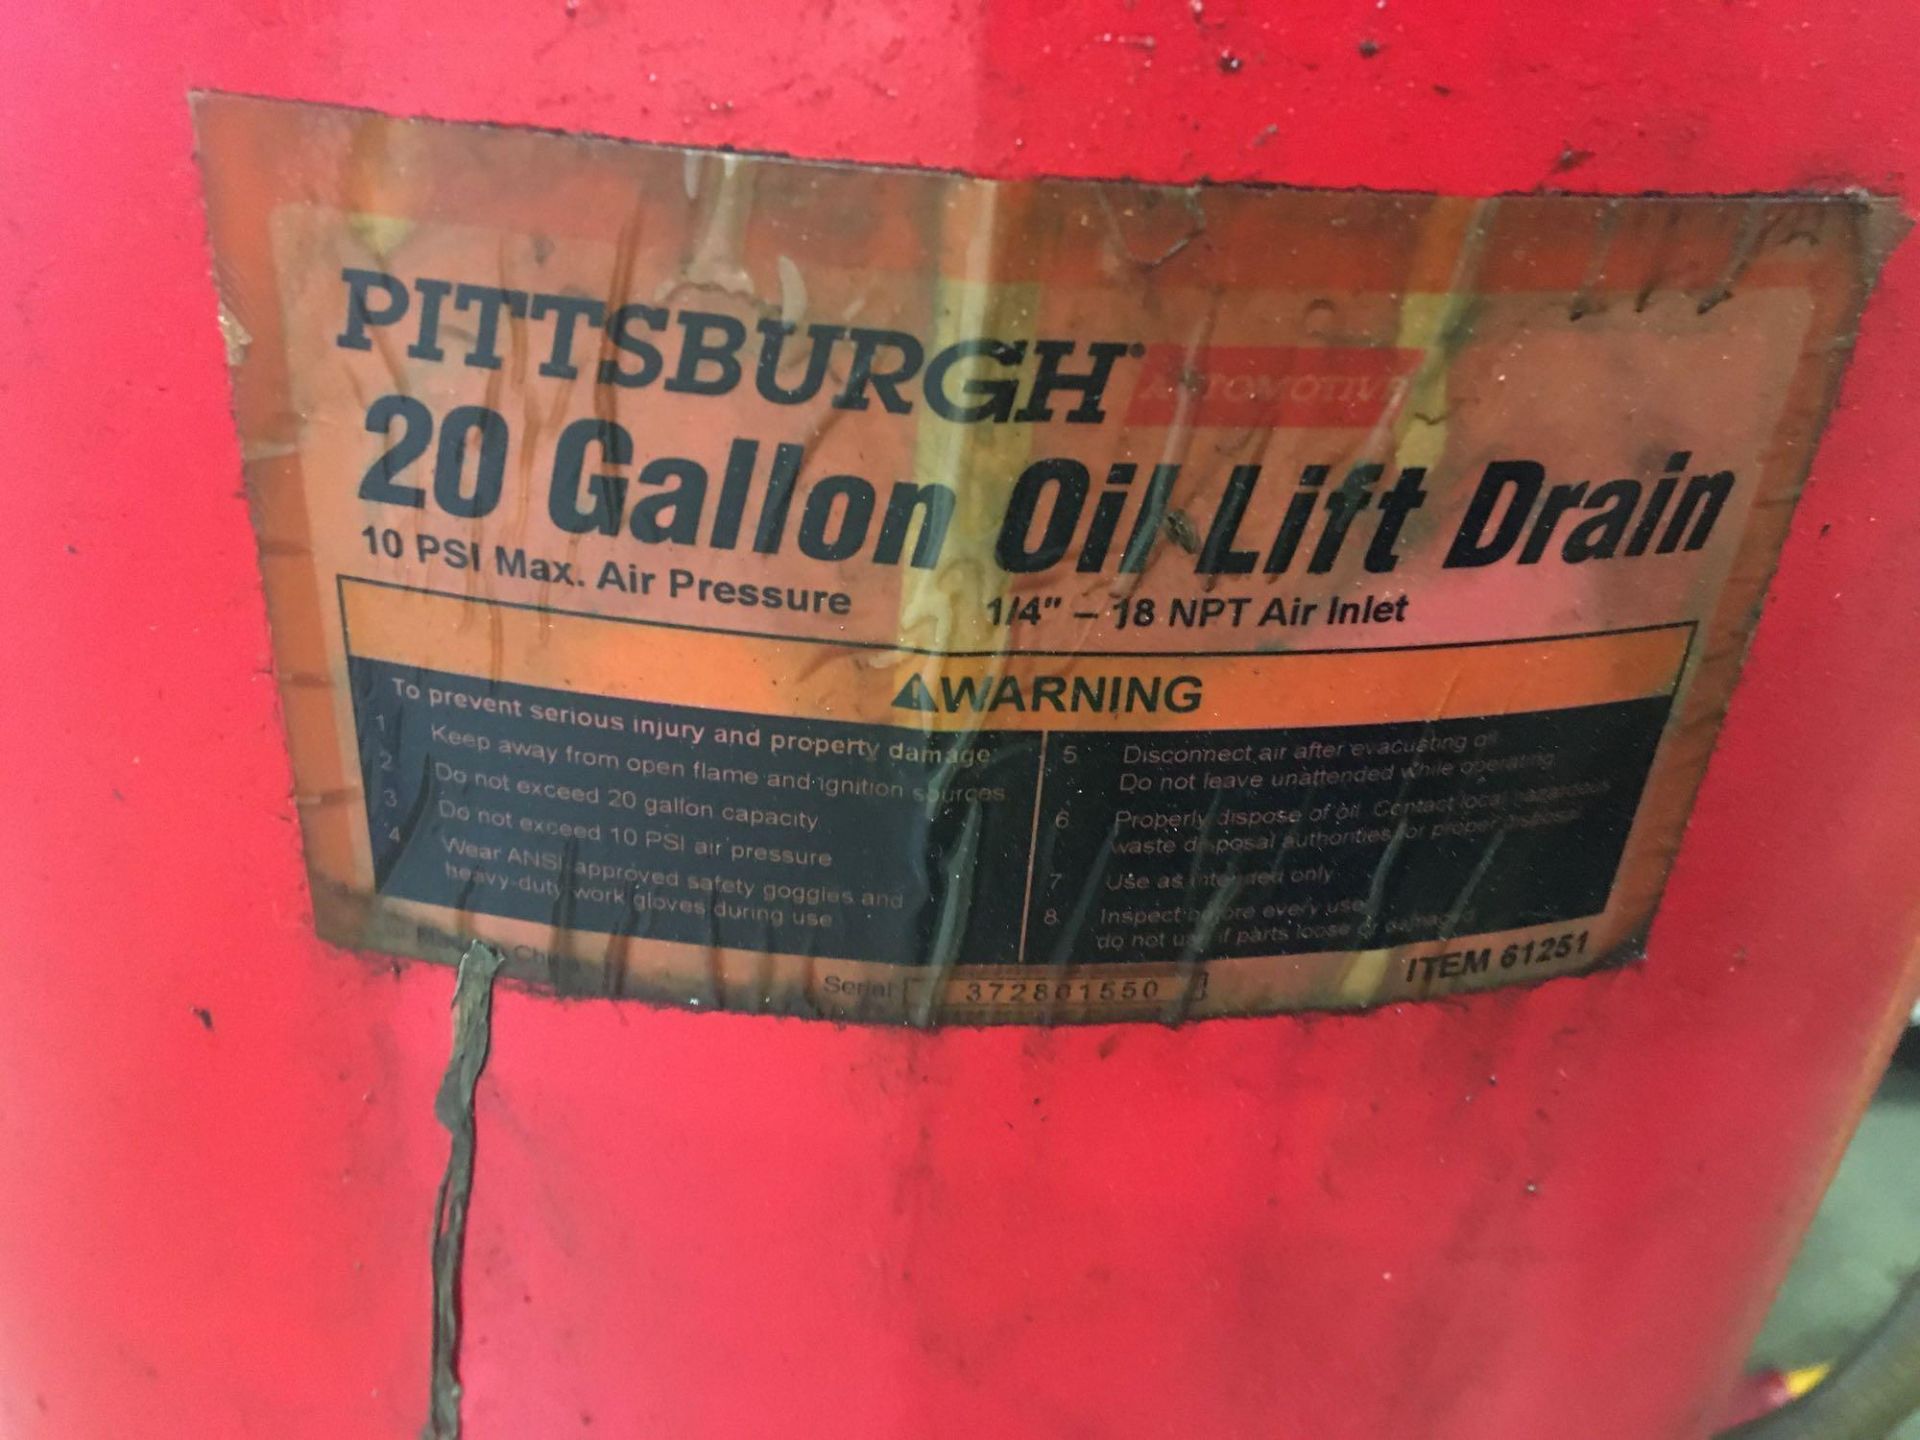 Oil Lift Drain - Image 4 of 4